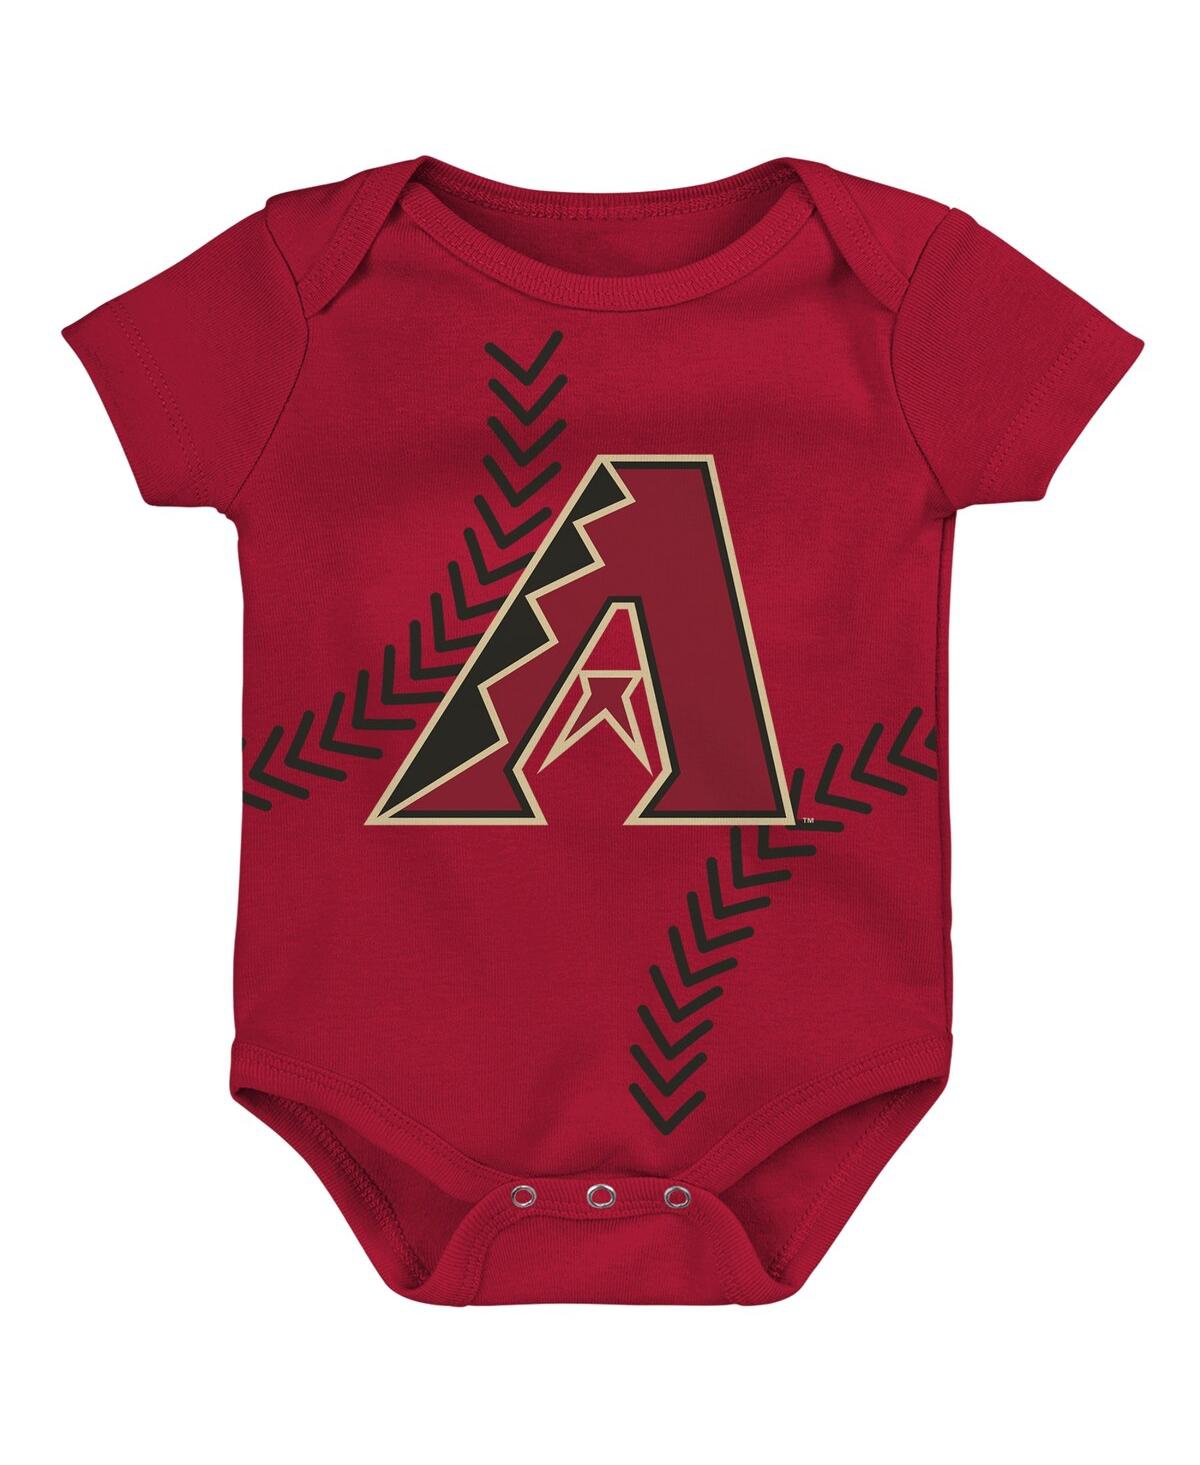 Outerstuff Babies' Newborn And Infant Boys And Girls Red Arizona Diamondbacks Running Home Bodysuit